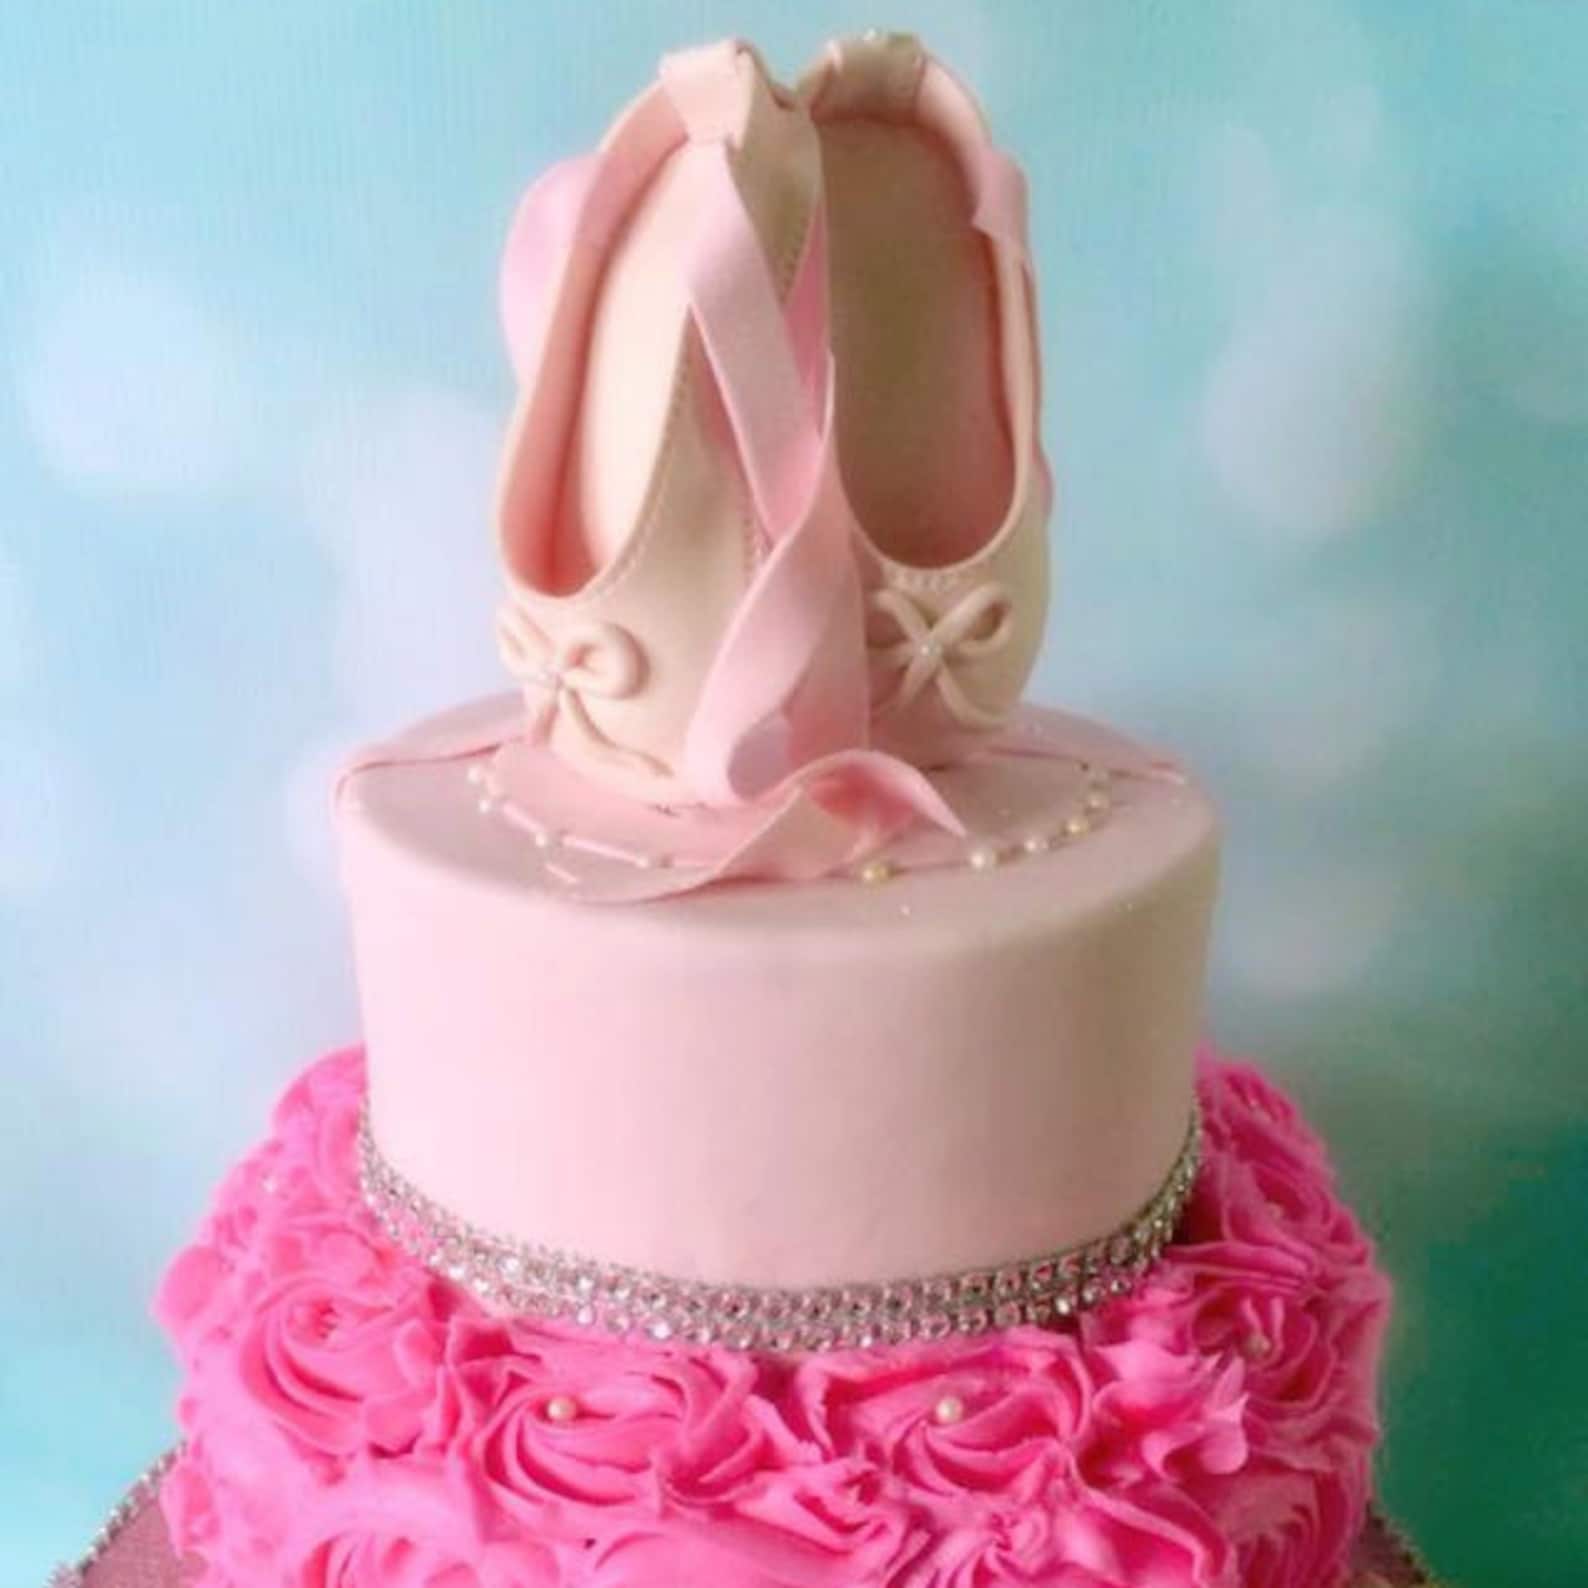 ballerina shoes and pedestal cake topper ballet shoes cake topper birthday cake topper ballerina cake decorations ballerina birt